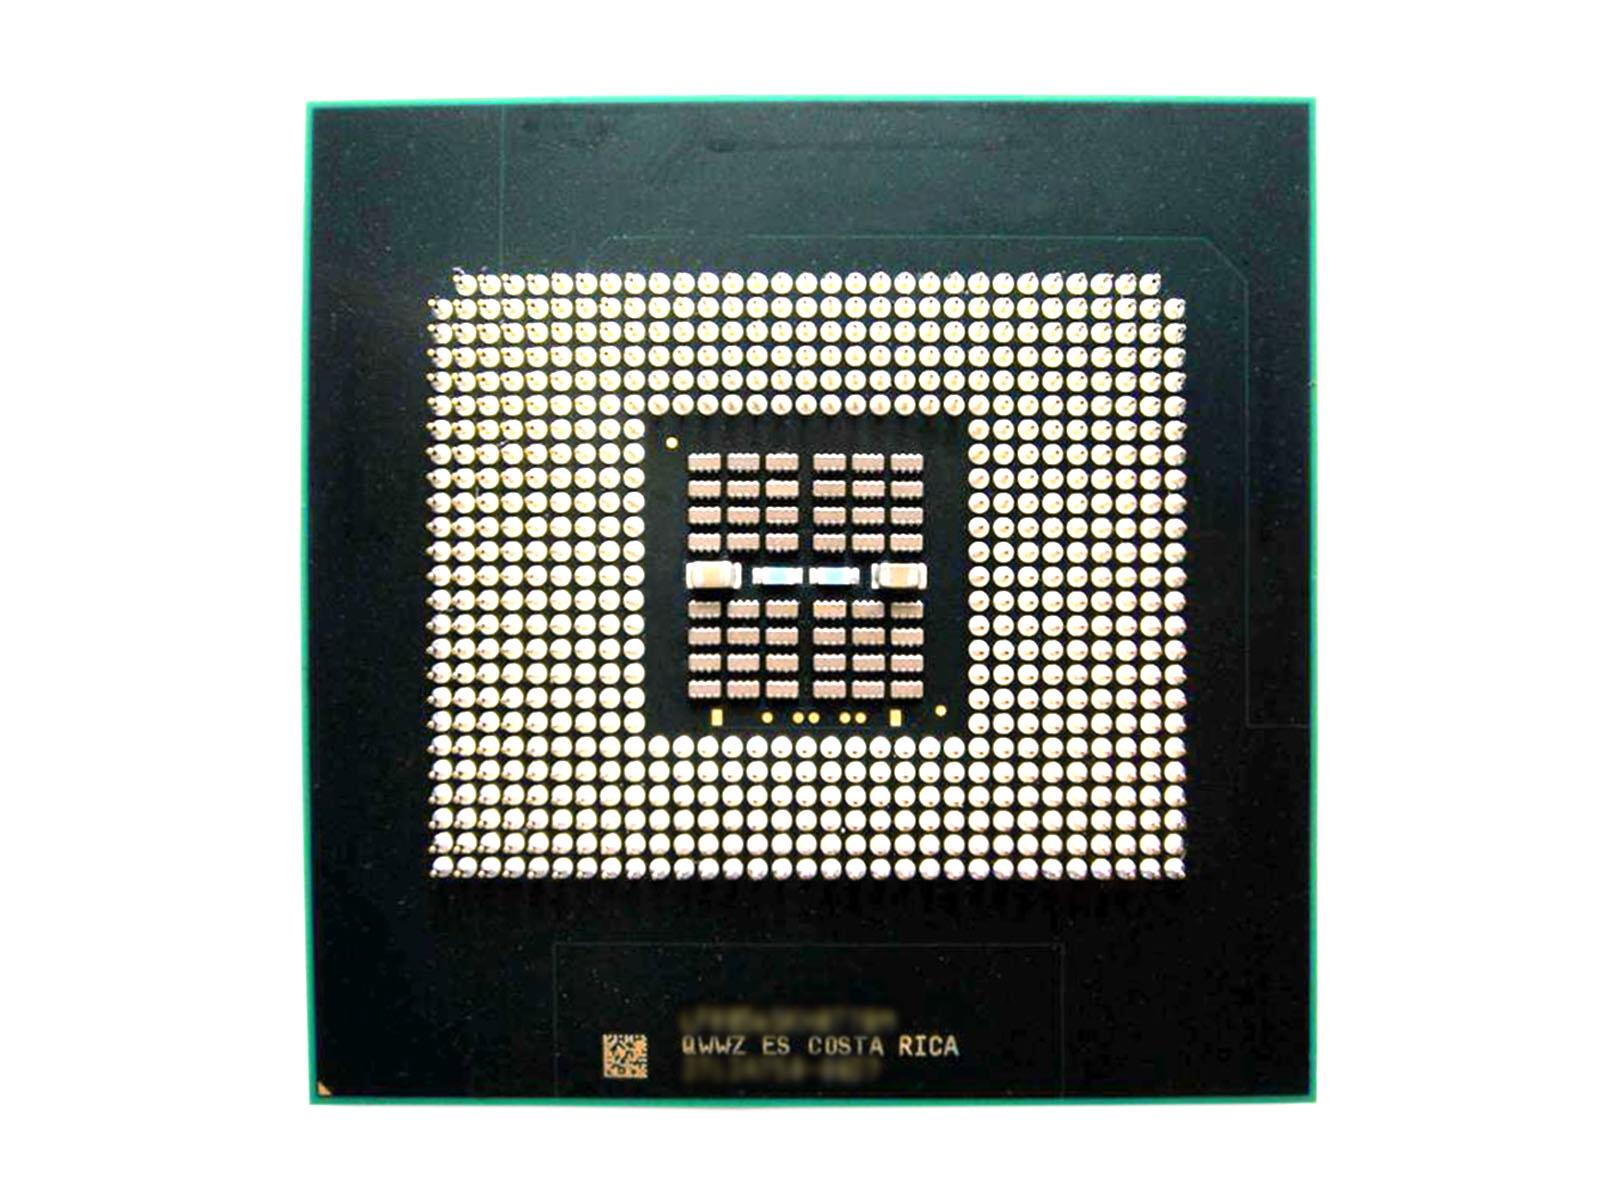 Intel Xeon 604 3.6GHz CPU